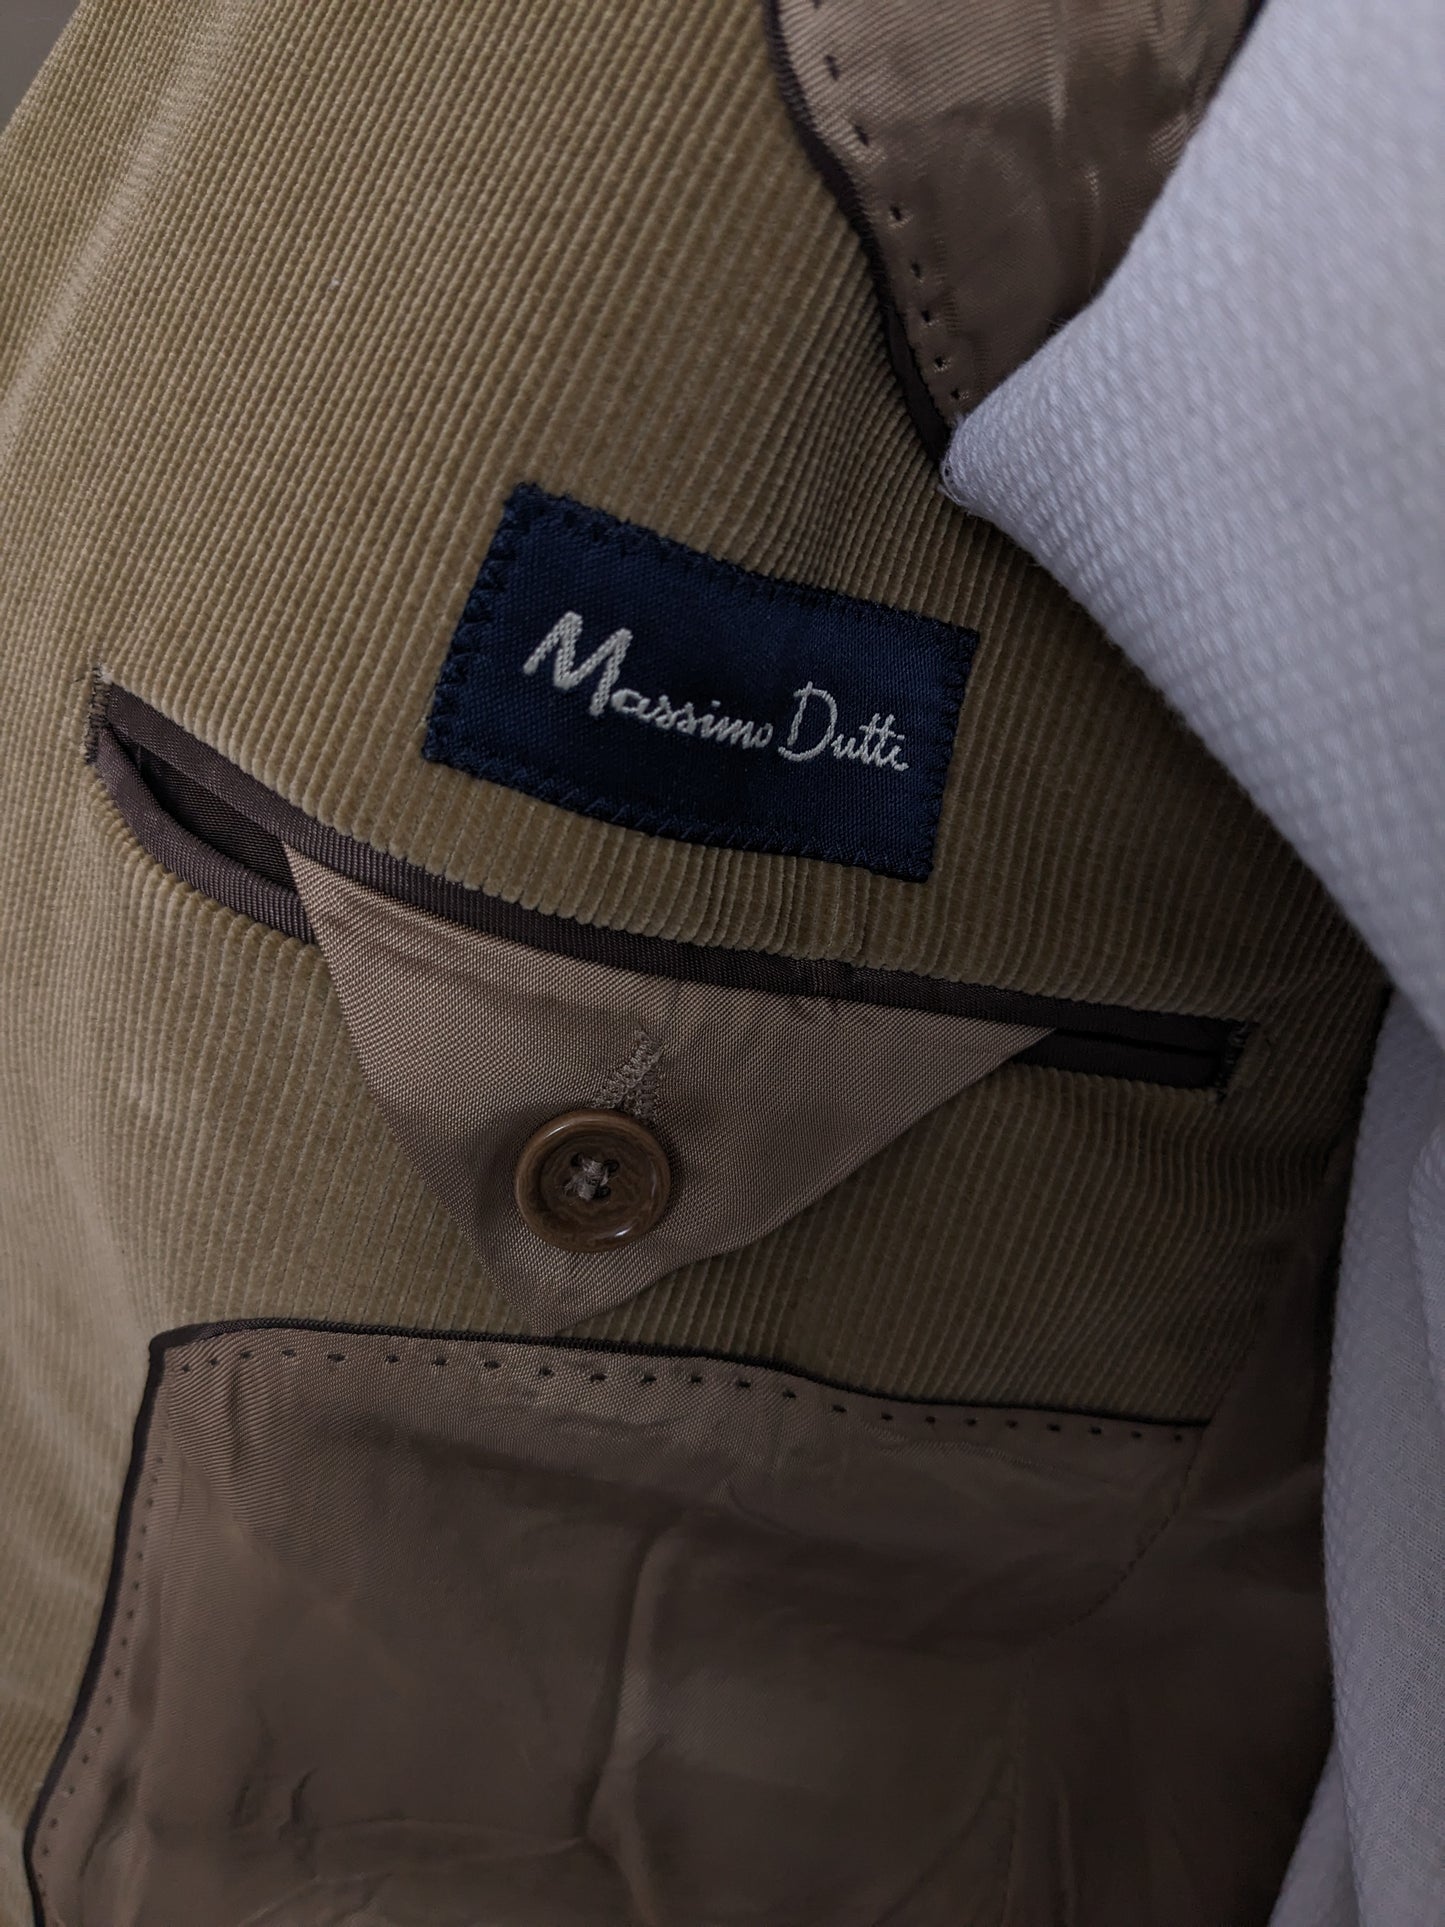 Massimo Dutti rib jacket. Light brown colored. Size 50 / M.